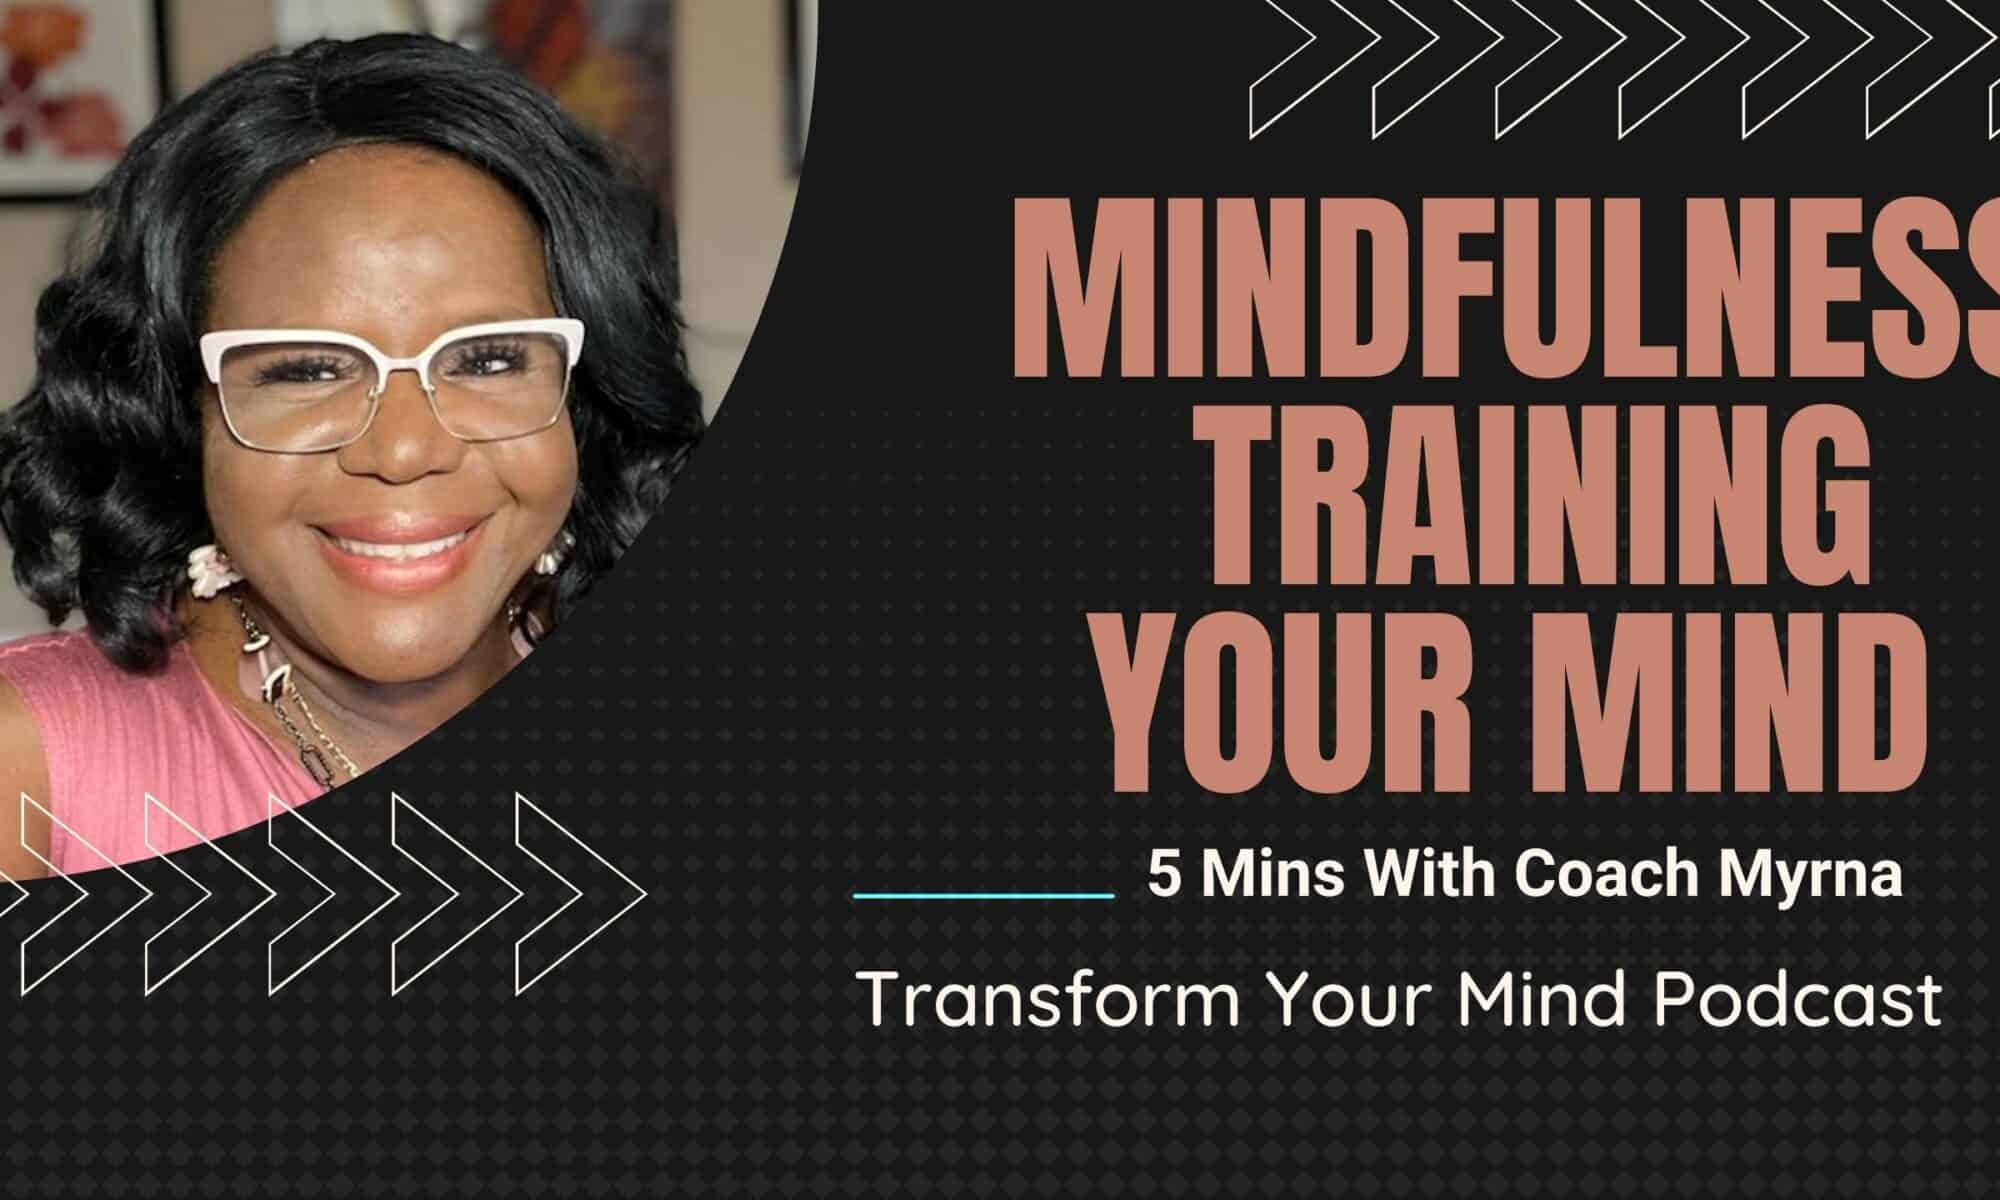 Mindfulness Training Your Mind